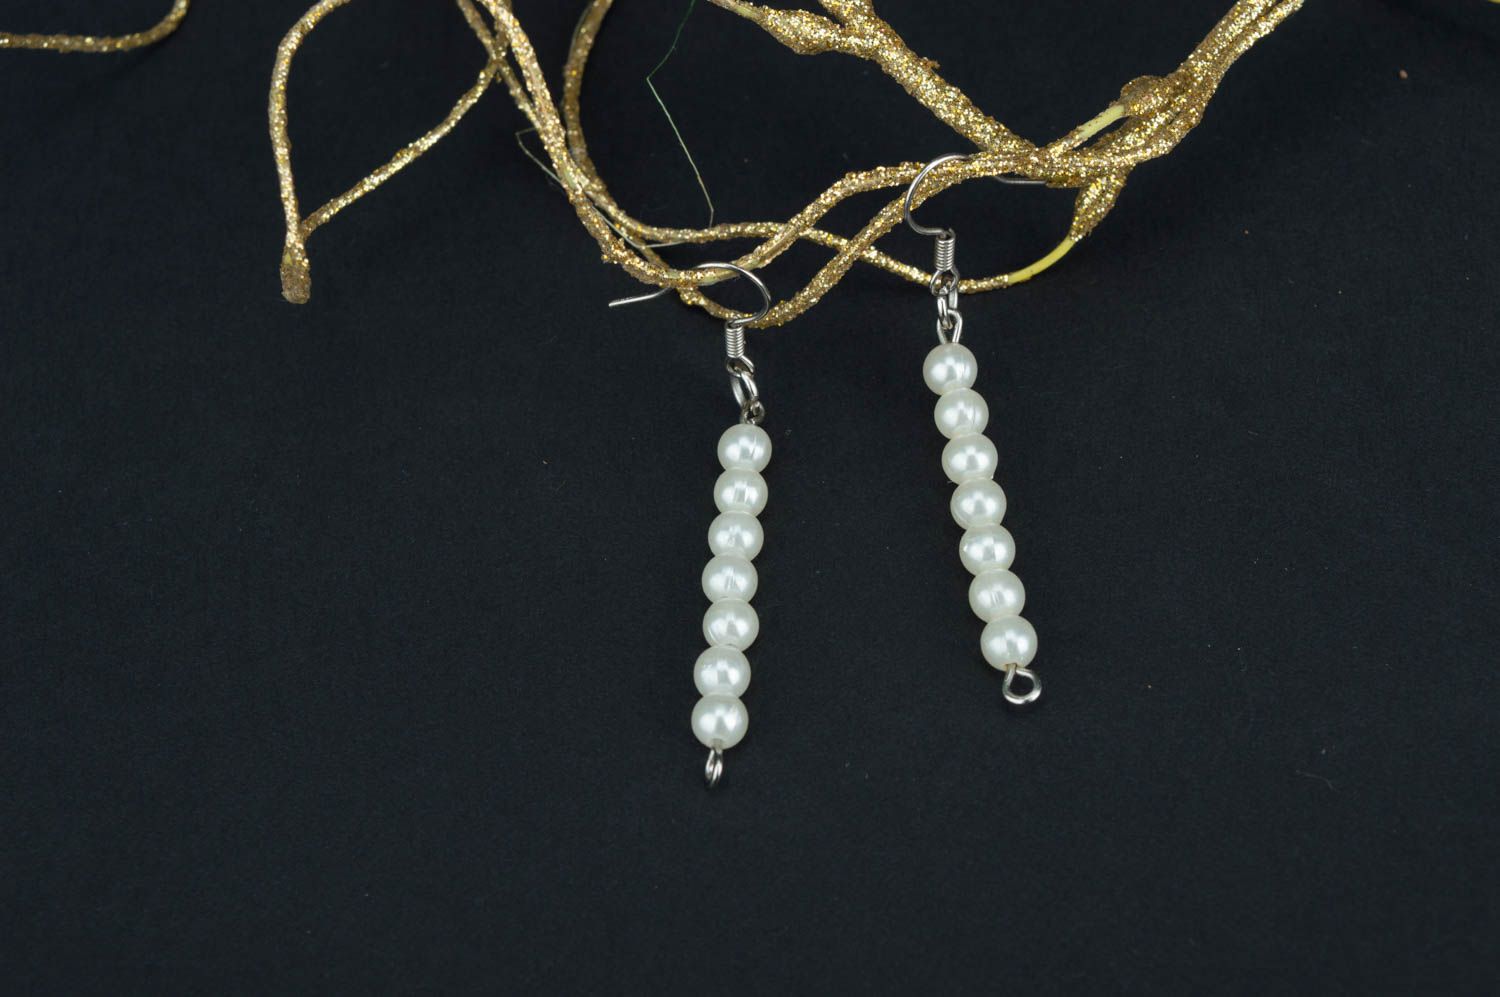 Handmade earrings beaded jewelry designer accessories gift ideas for women photo 1